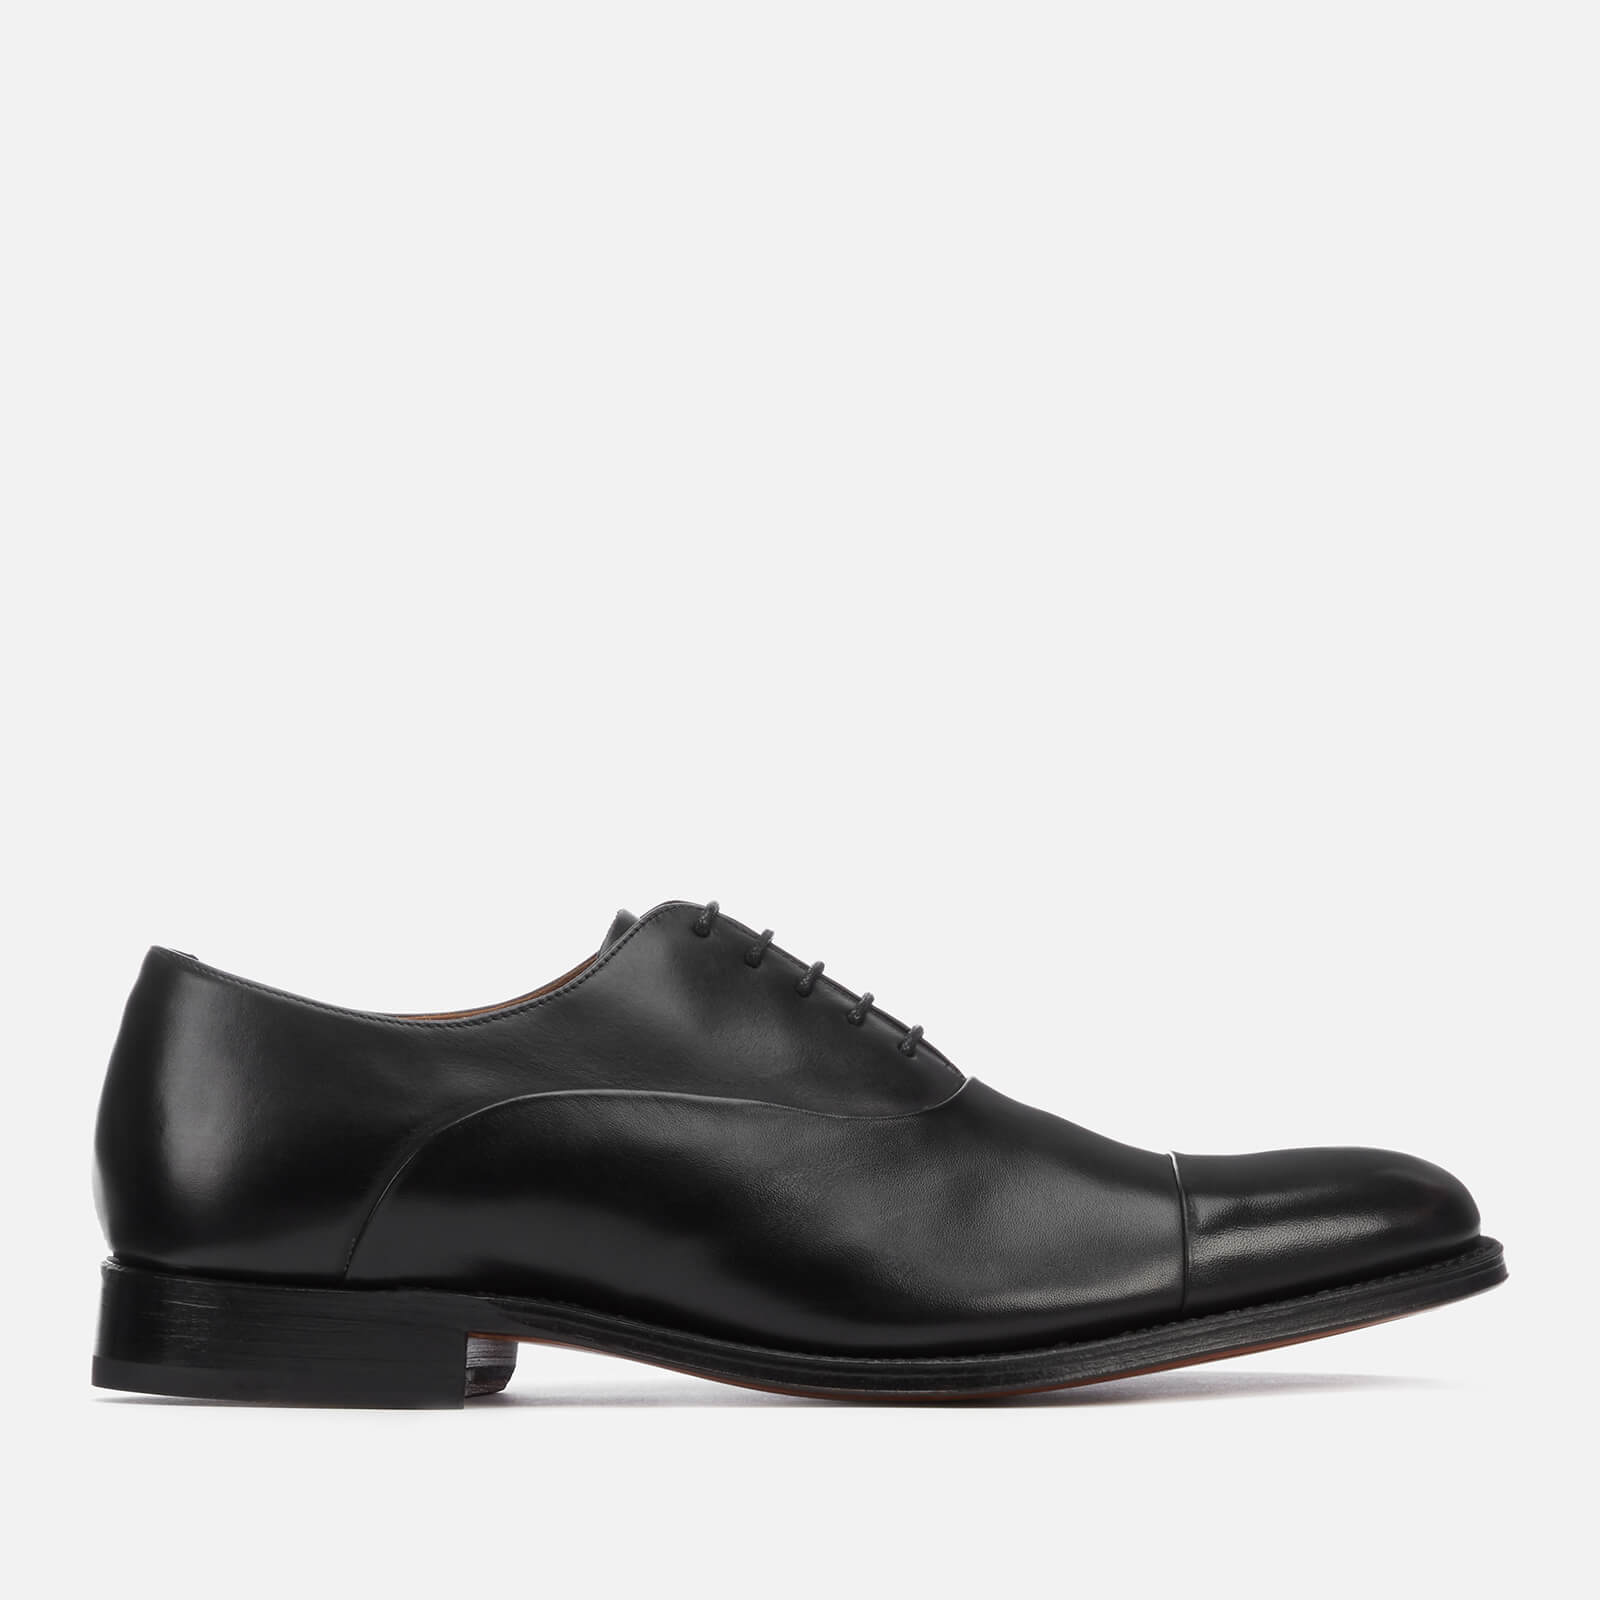 Grenson Men's Bert Leather Toe Cap Oxford Shoes - Black - UK 9